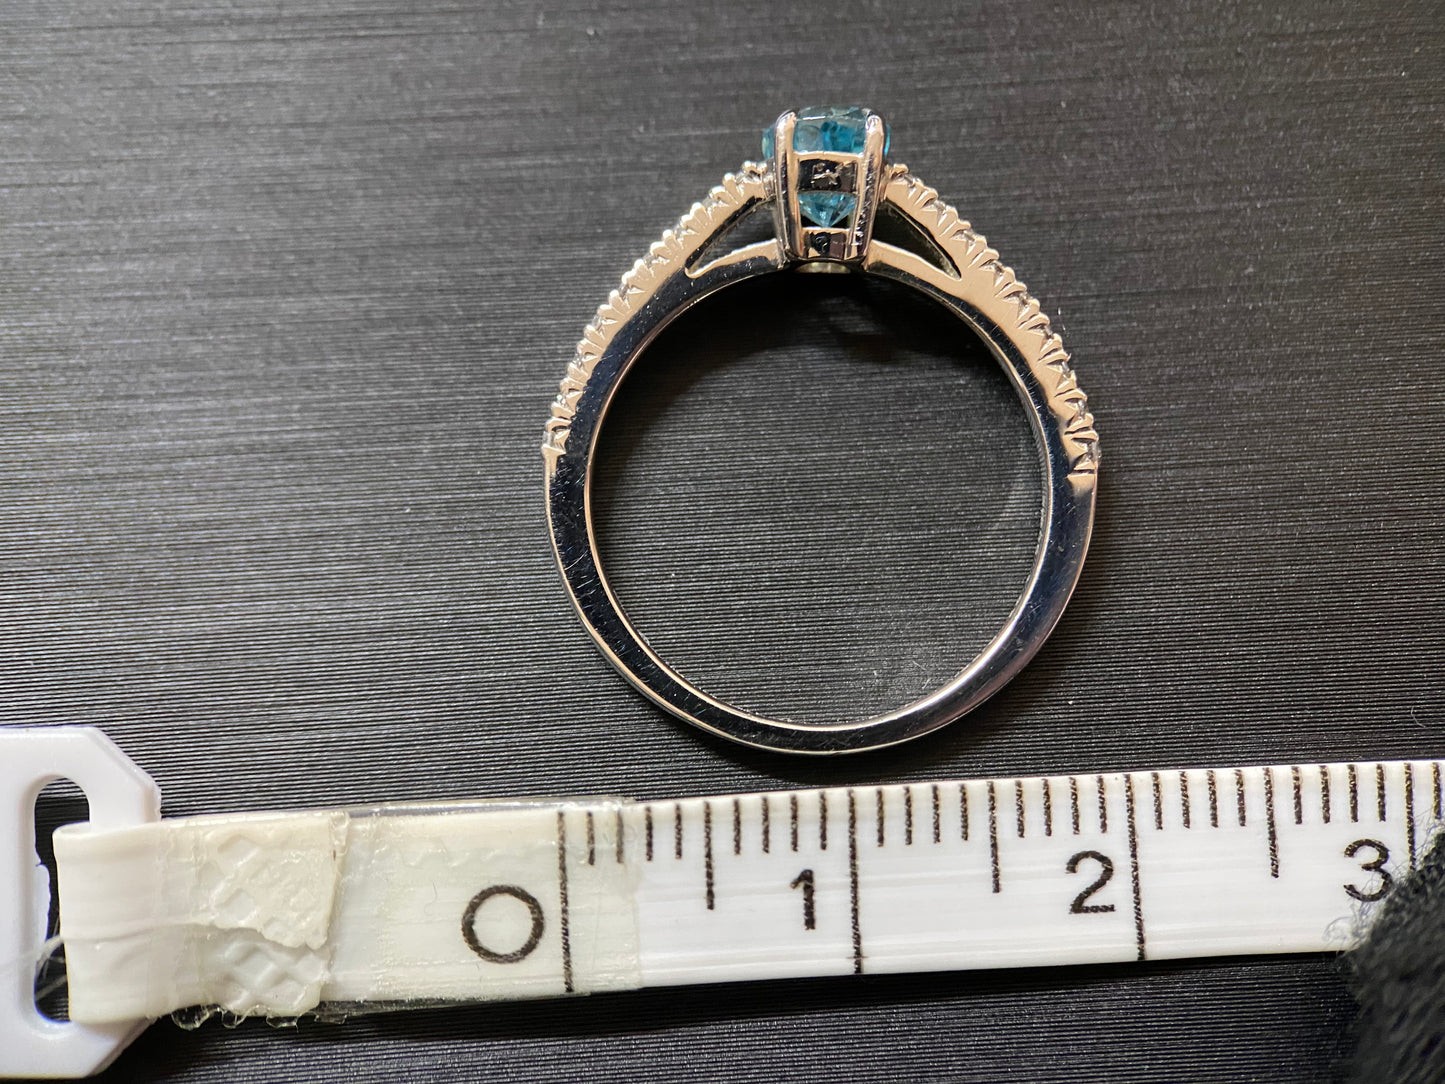 New] [Rare Stone] Blue Zircon Ring Jewelry Pt900